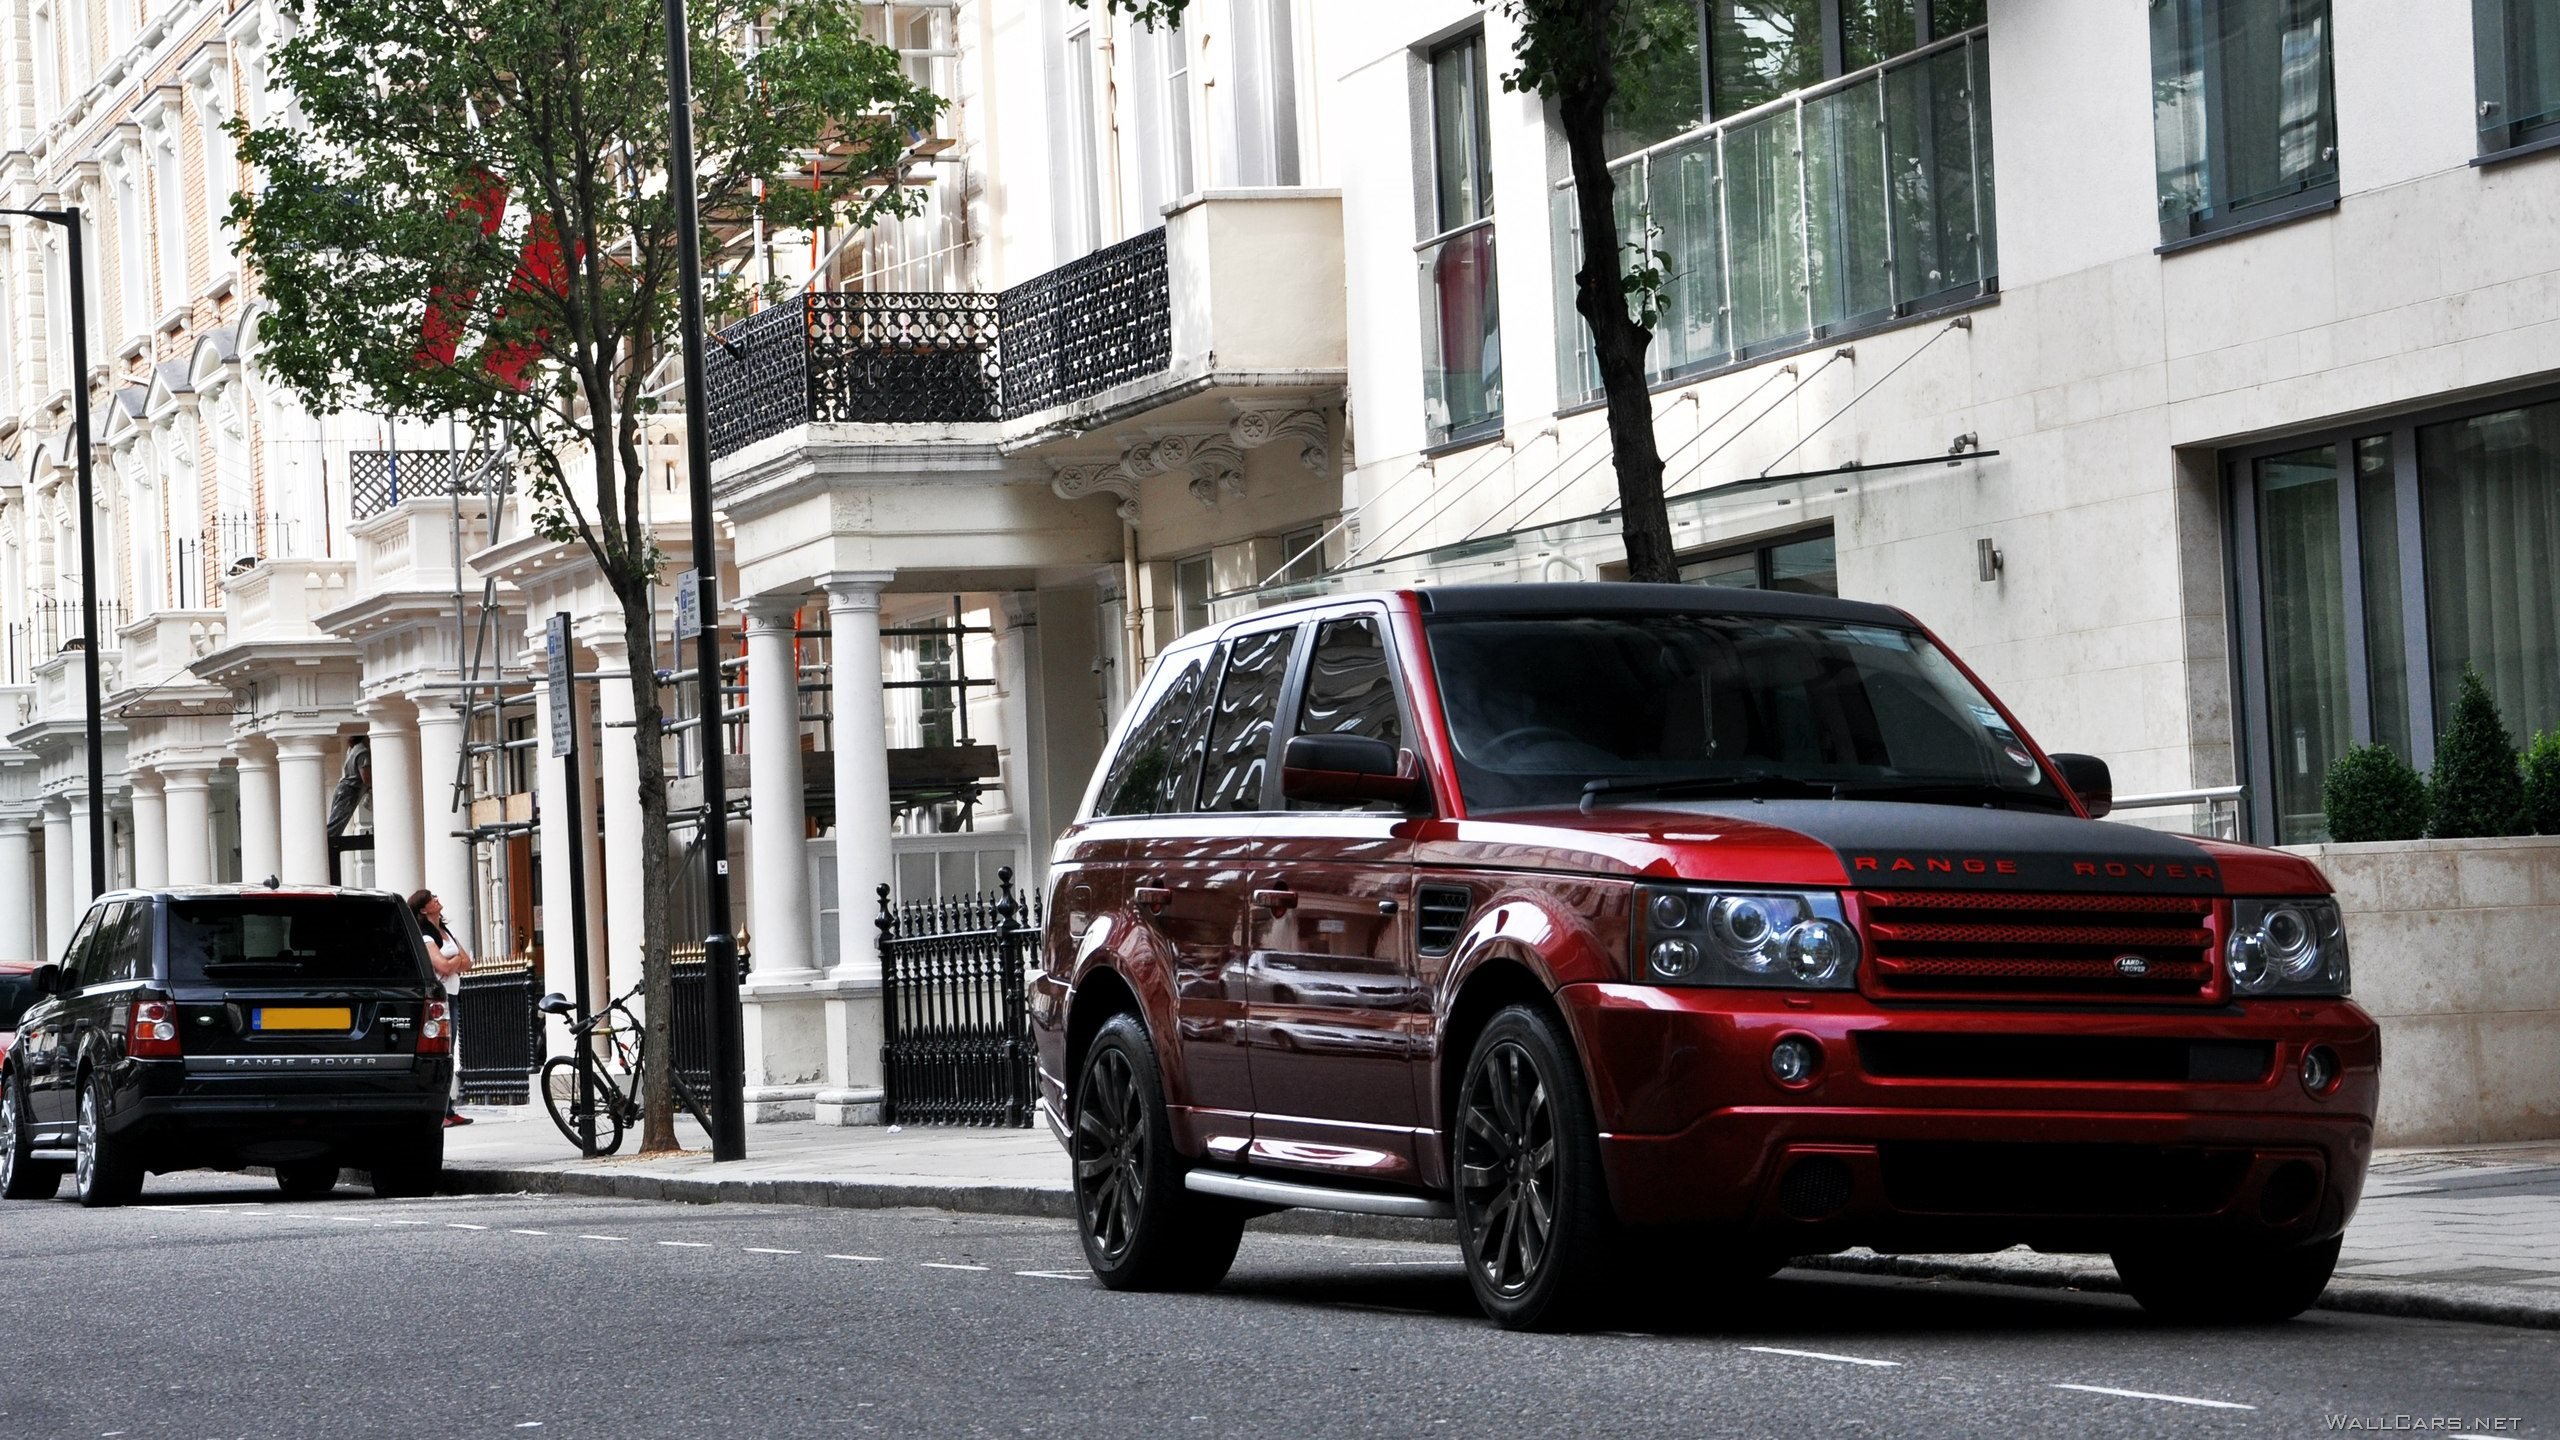 Красный Range Rover, тюнинг, улица, обочина